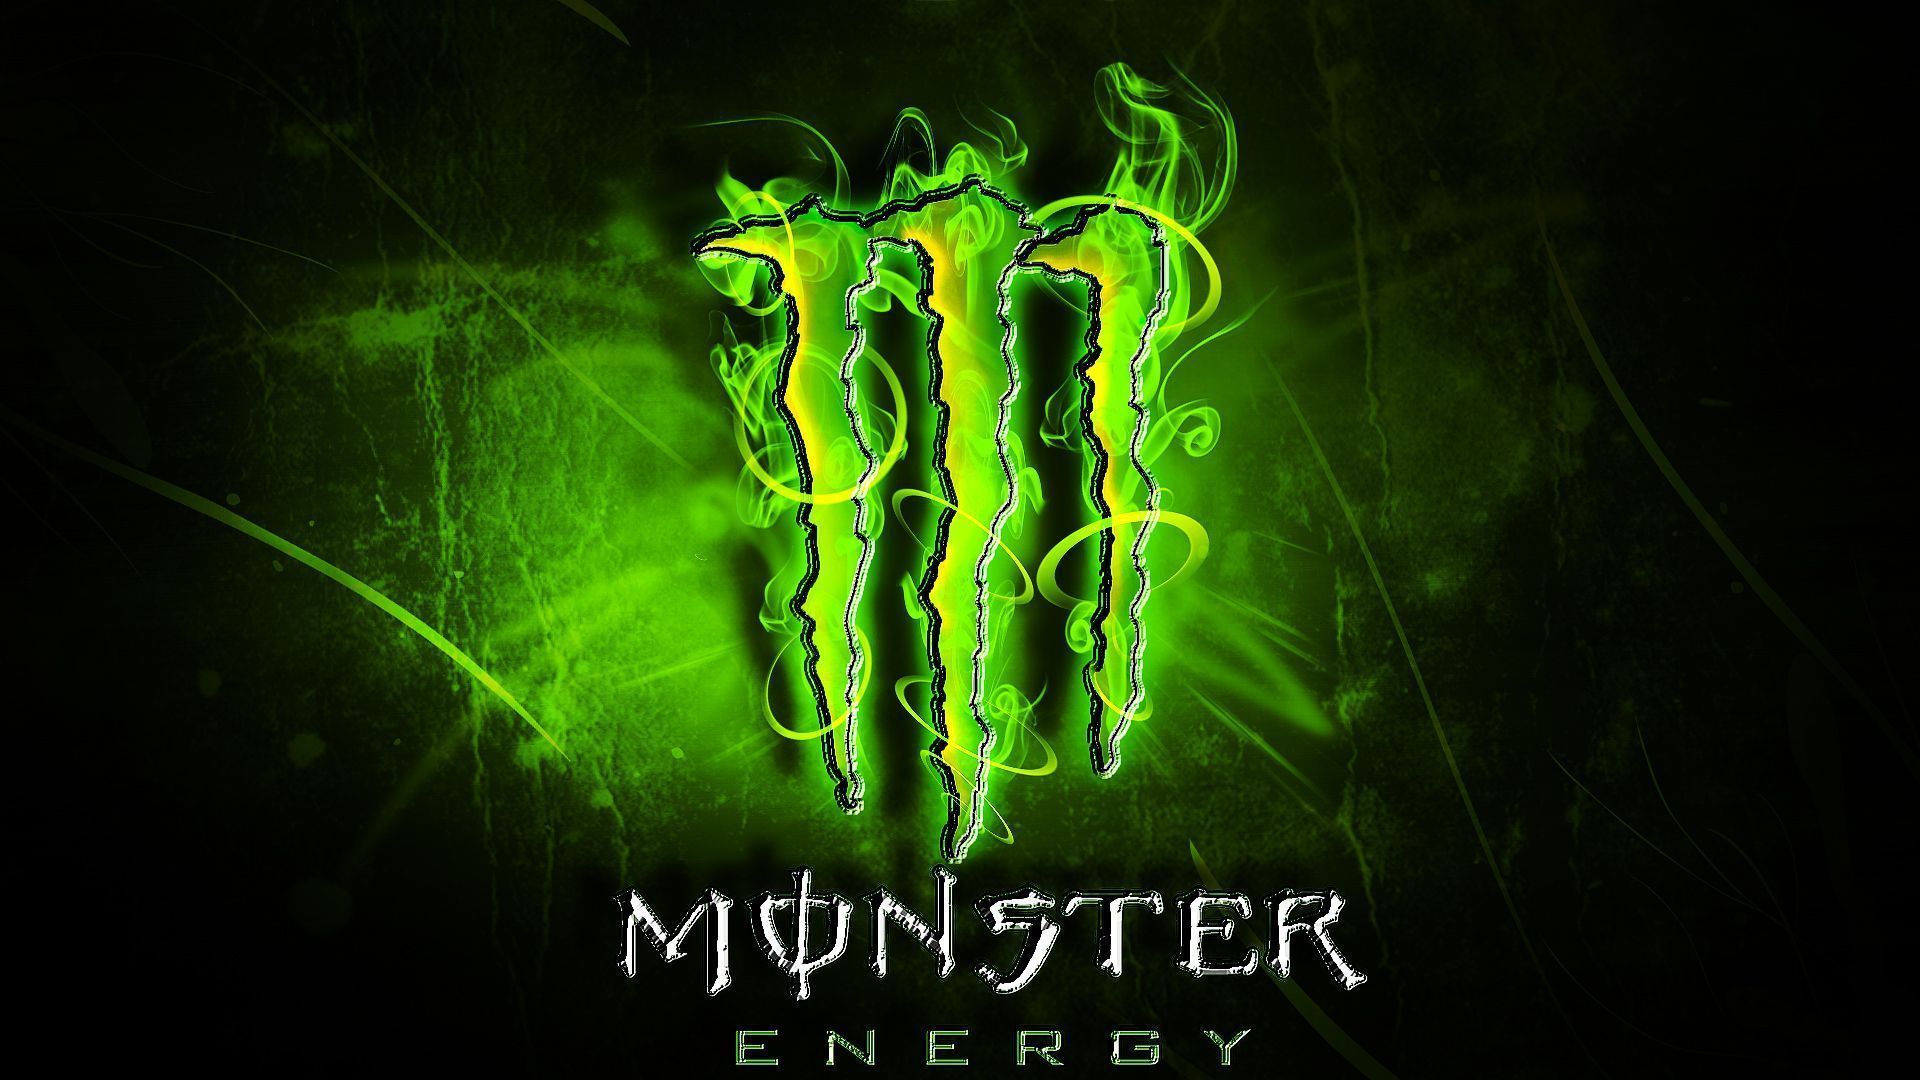 Full HD Monster Energy Download Wallpapers - Manualwall.com